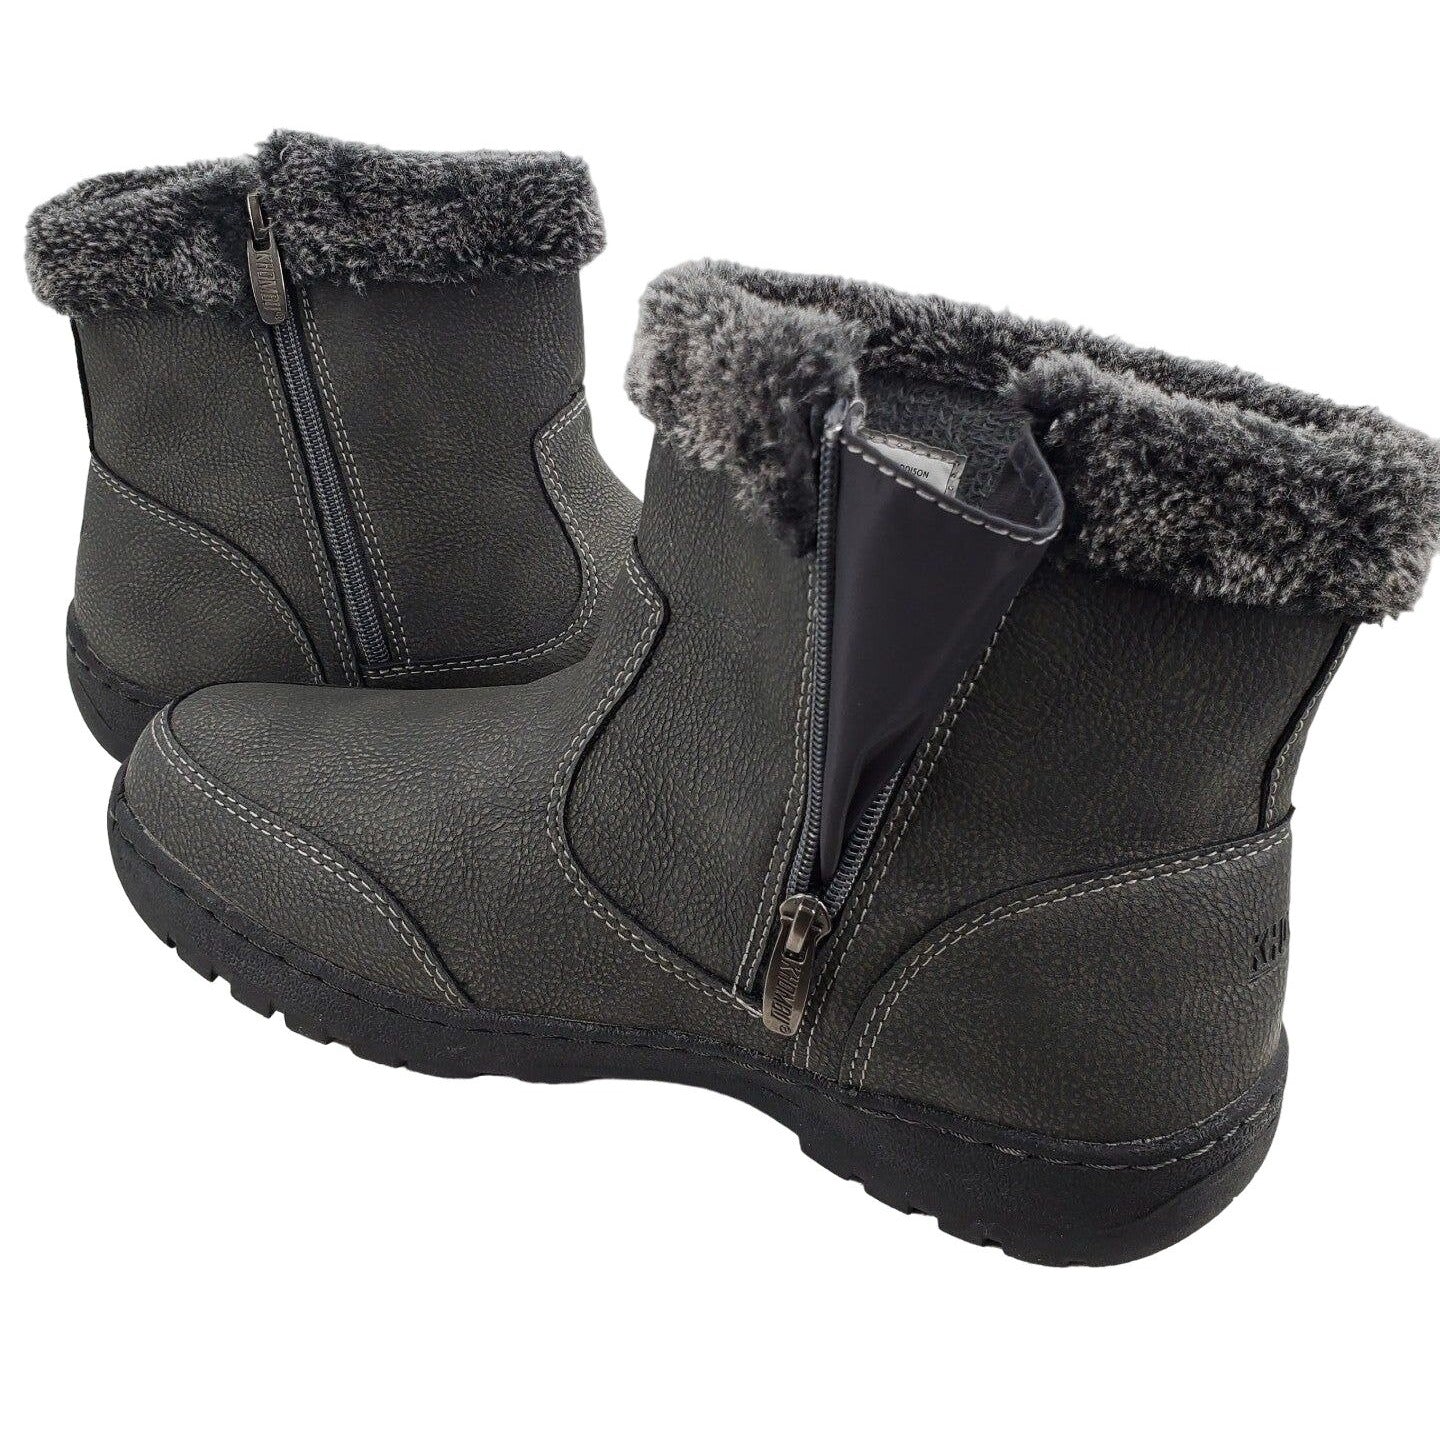 KHOMBU Boots Woman's Outdoor Gray Faux fur Water-repellent Shoes